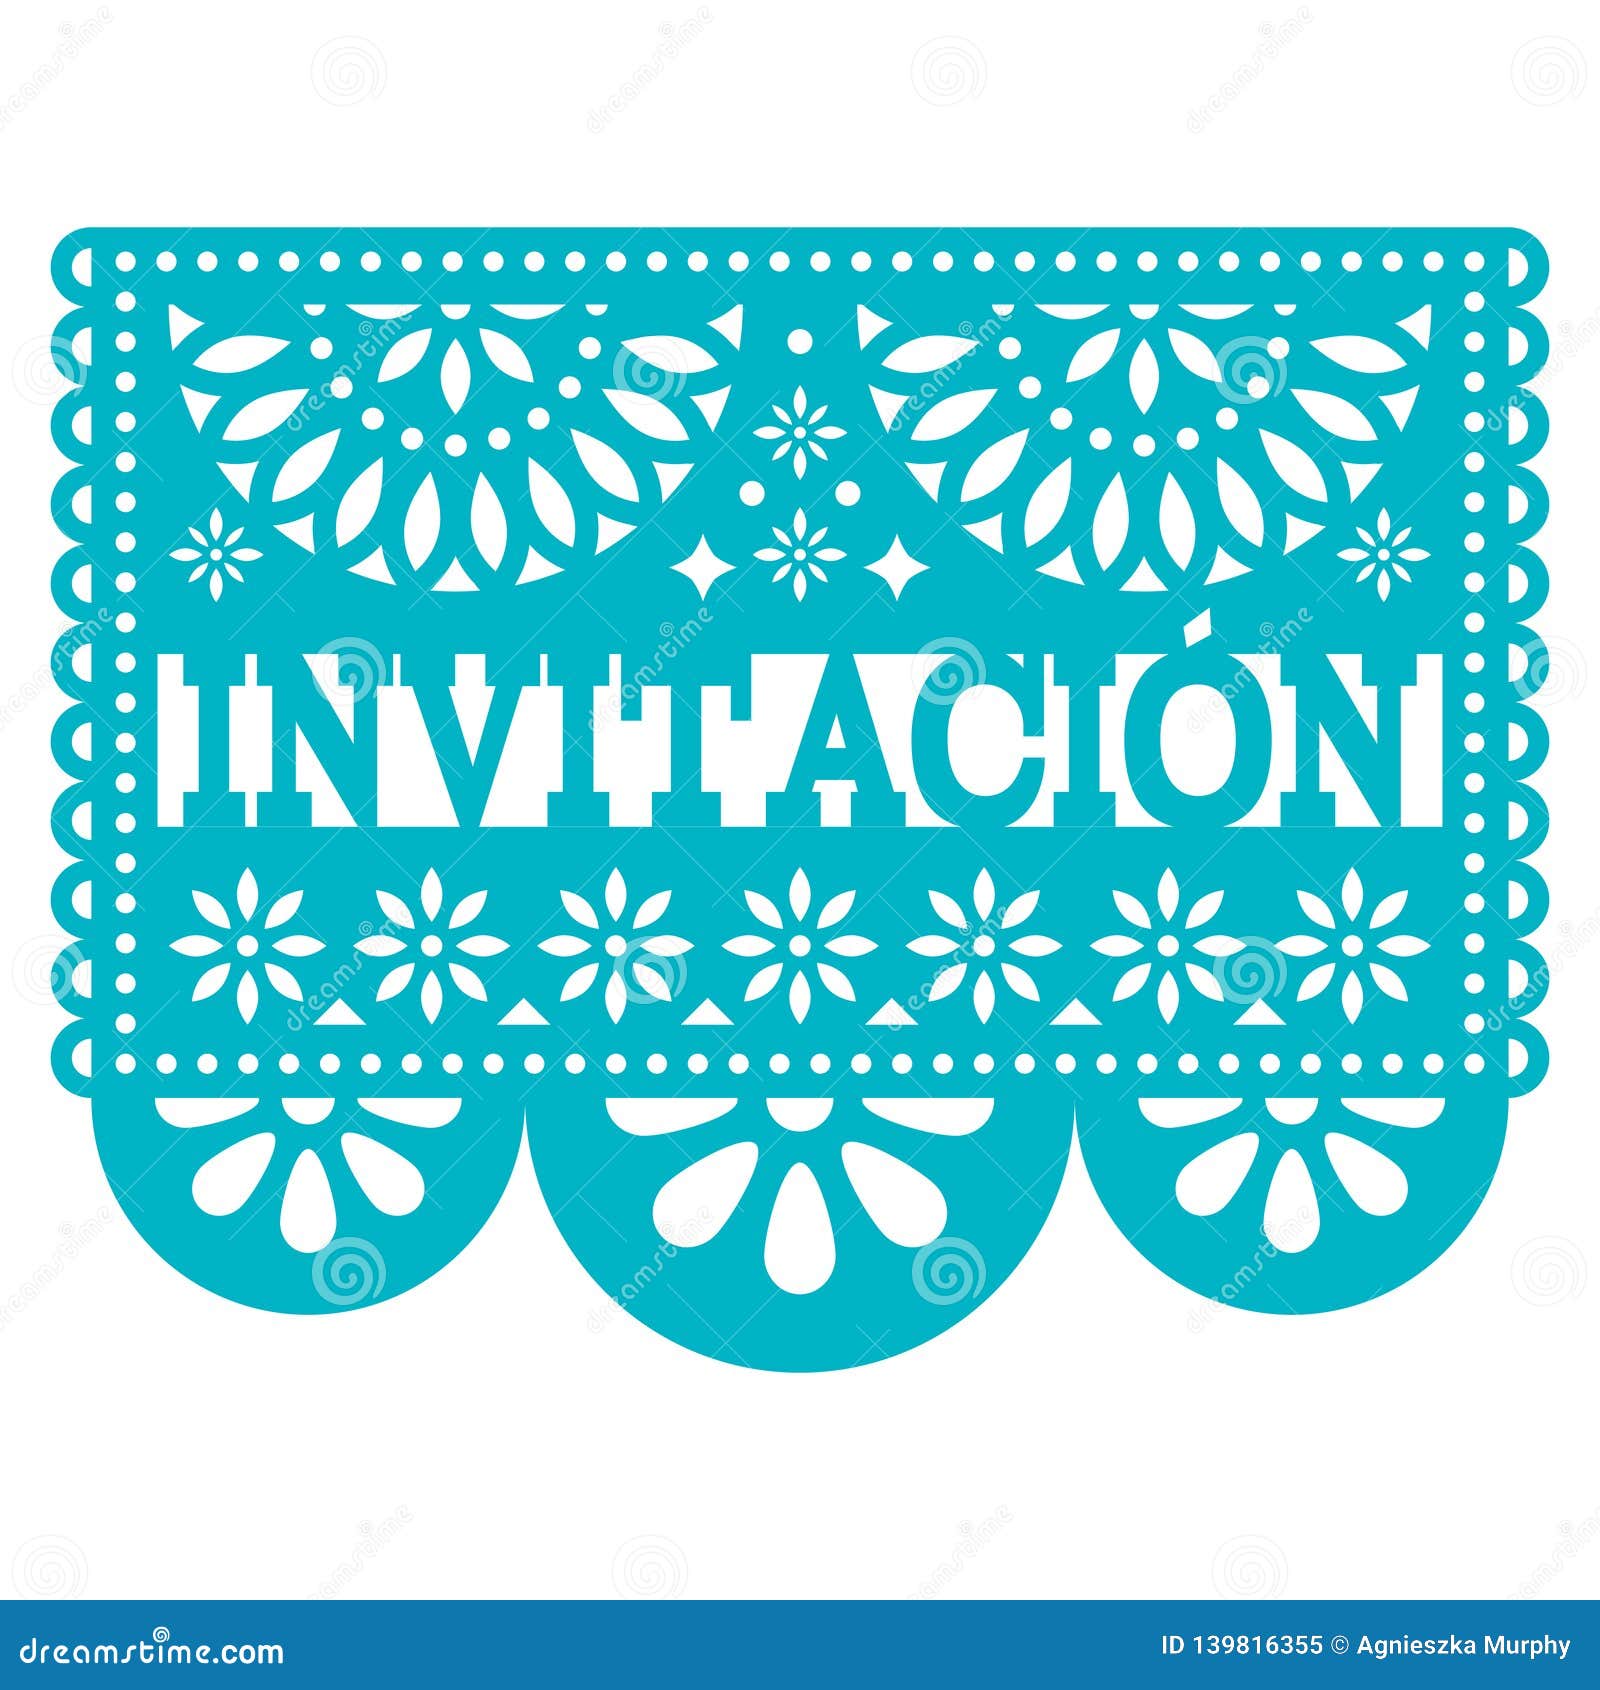 invitacion papel picado   - party invitation in spanish, mexican pattern greeting card